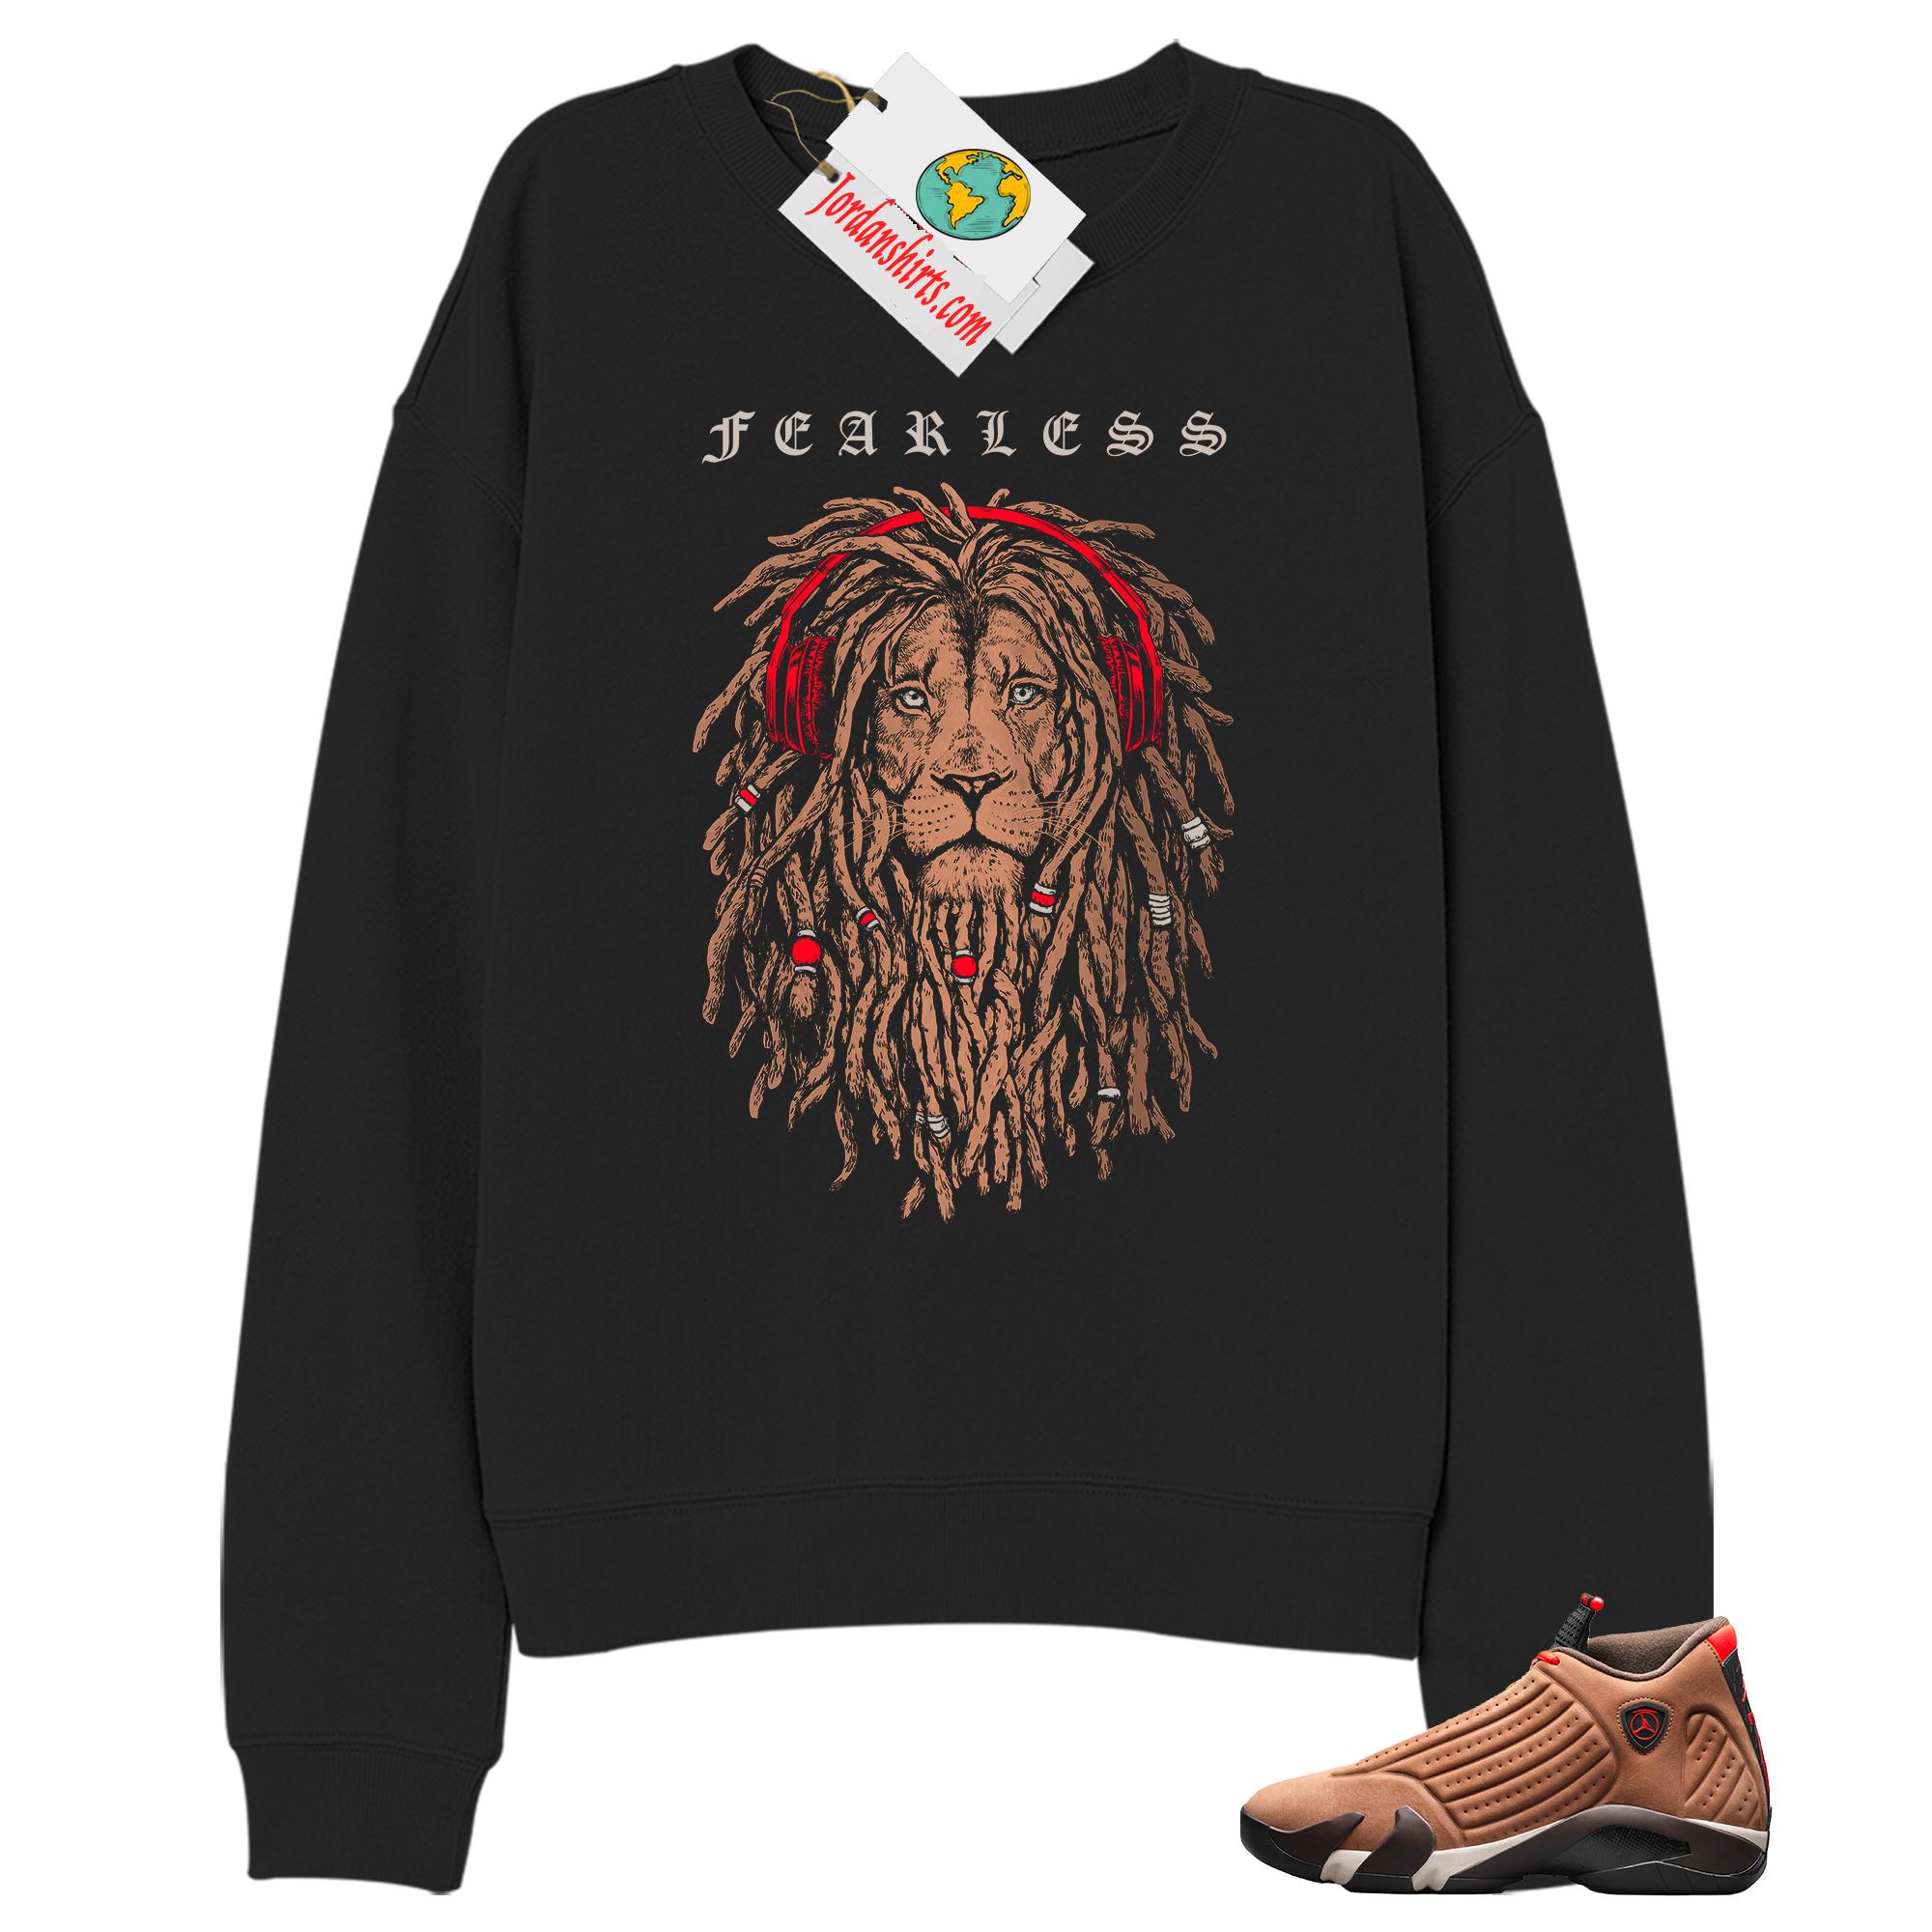 Jordan 14 Sweatshirt, Fearless Lion Black Sweatshirt Air Jordan 14 Winterized 14s Full Size Up To 5xl